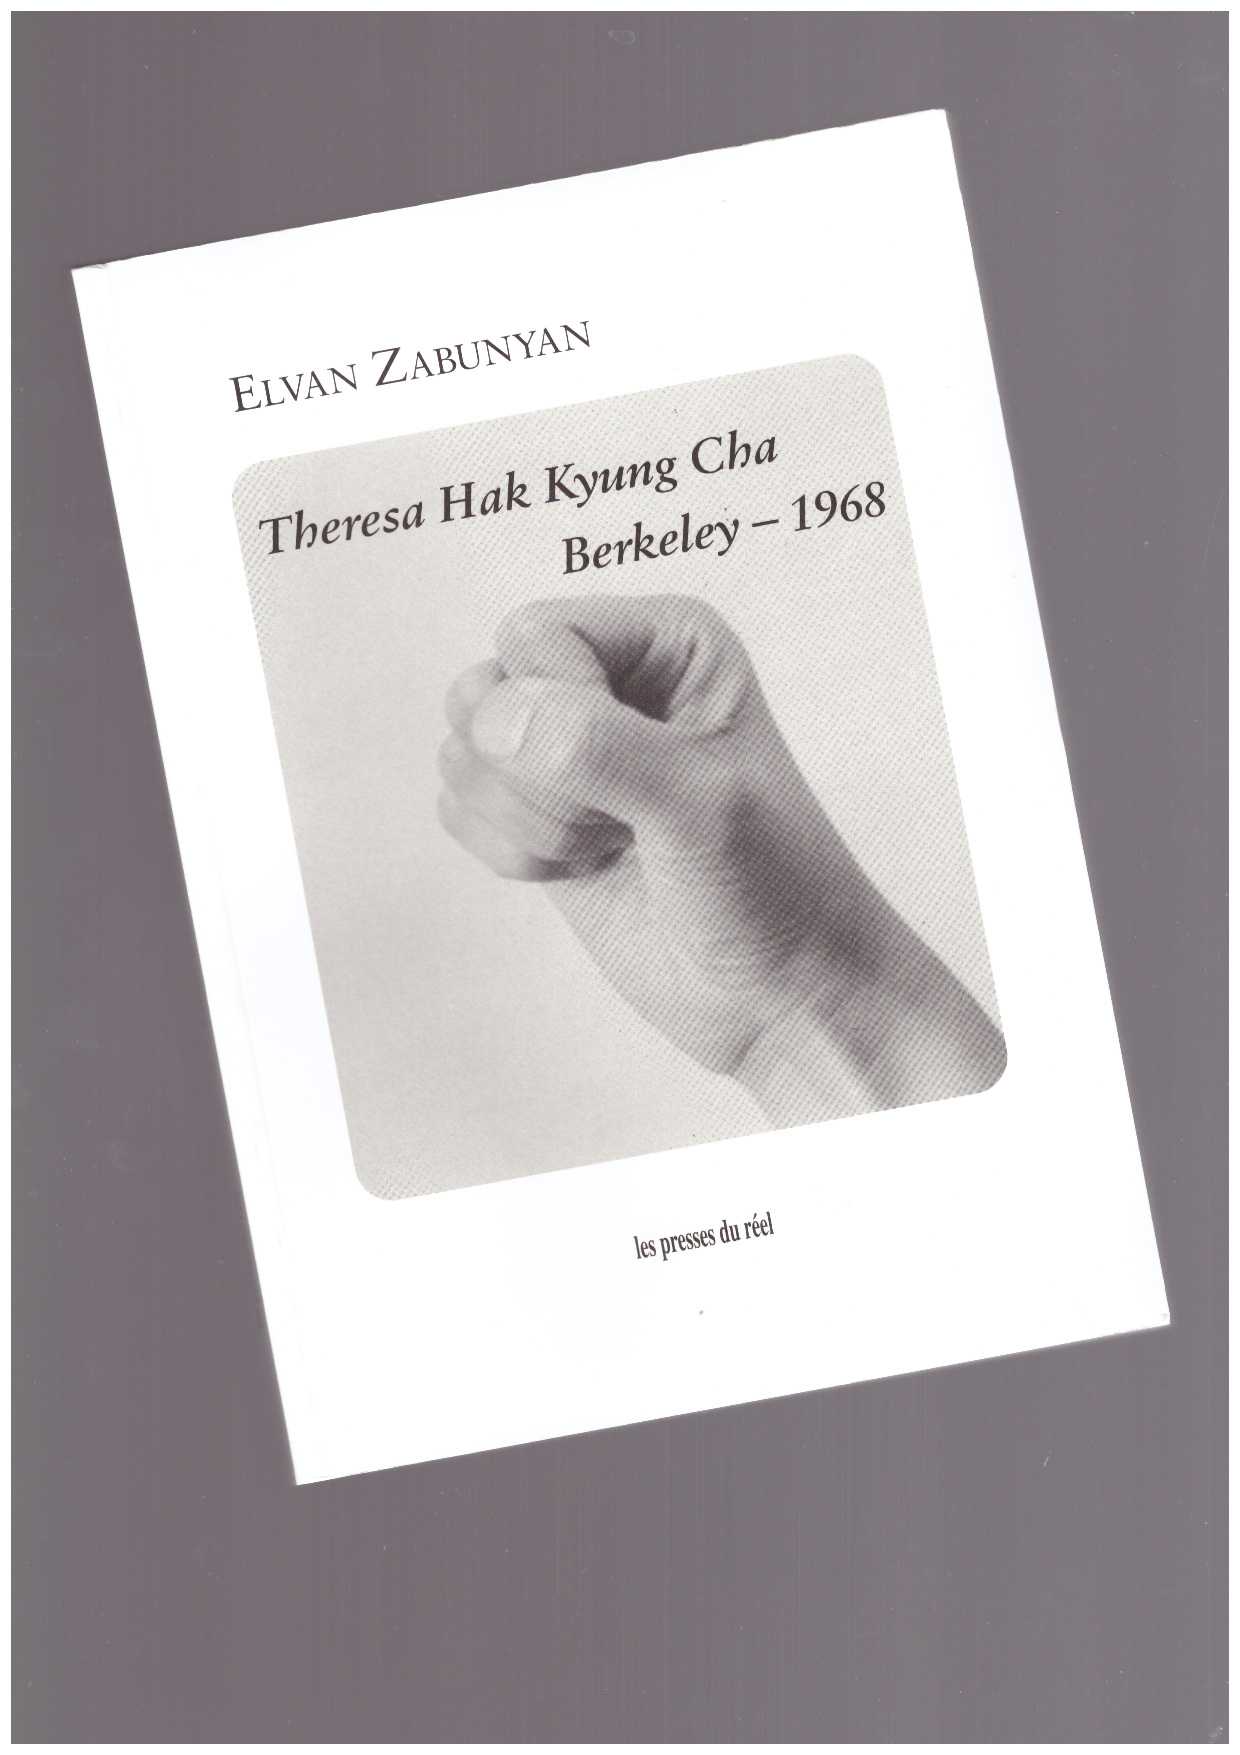 ZABUNYAN, Elvan - Theresa Hak Kyung Cha. Berkeley – 1968